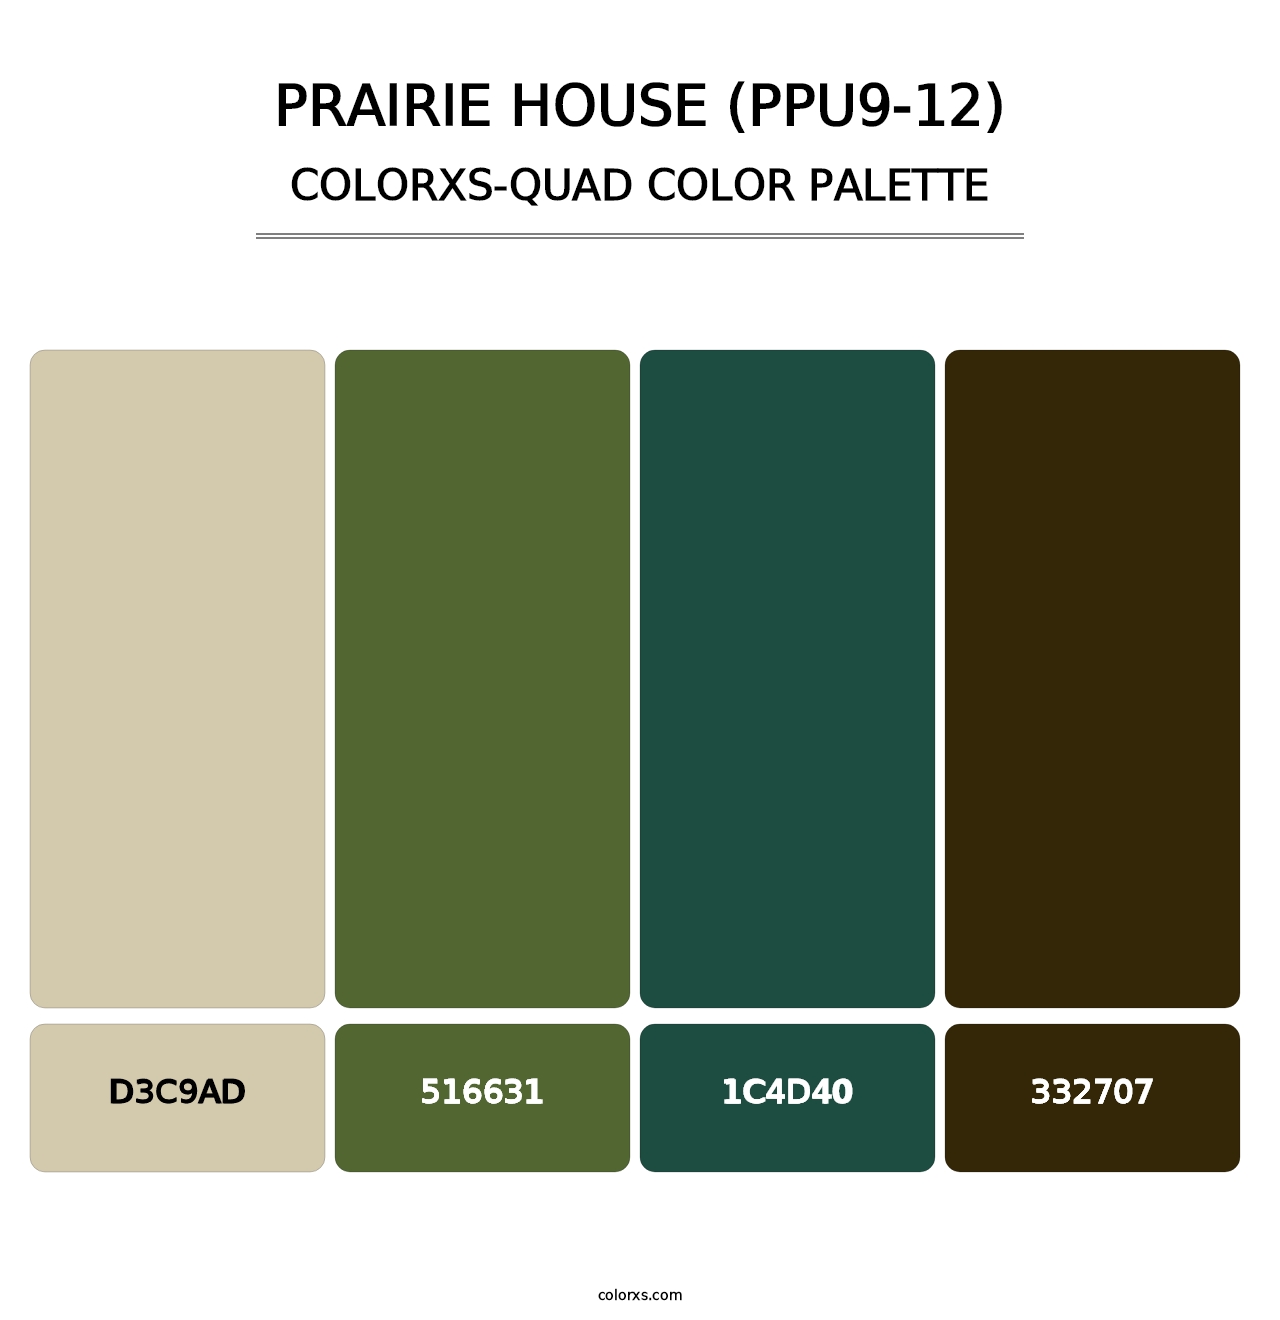 Prairie House (PPU9-12) - Colorxs Quad Palette